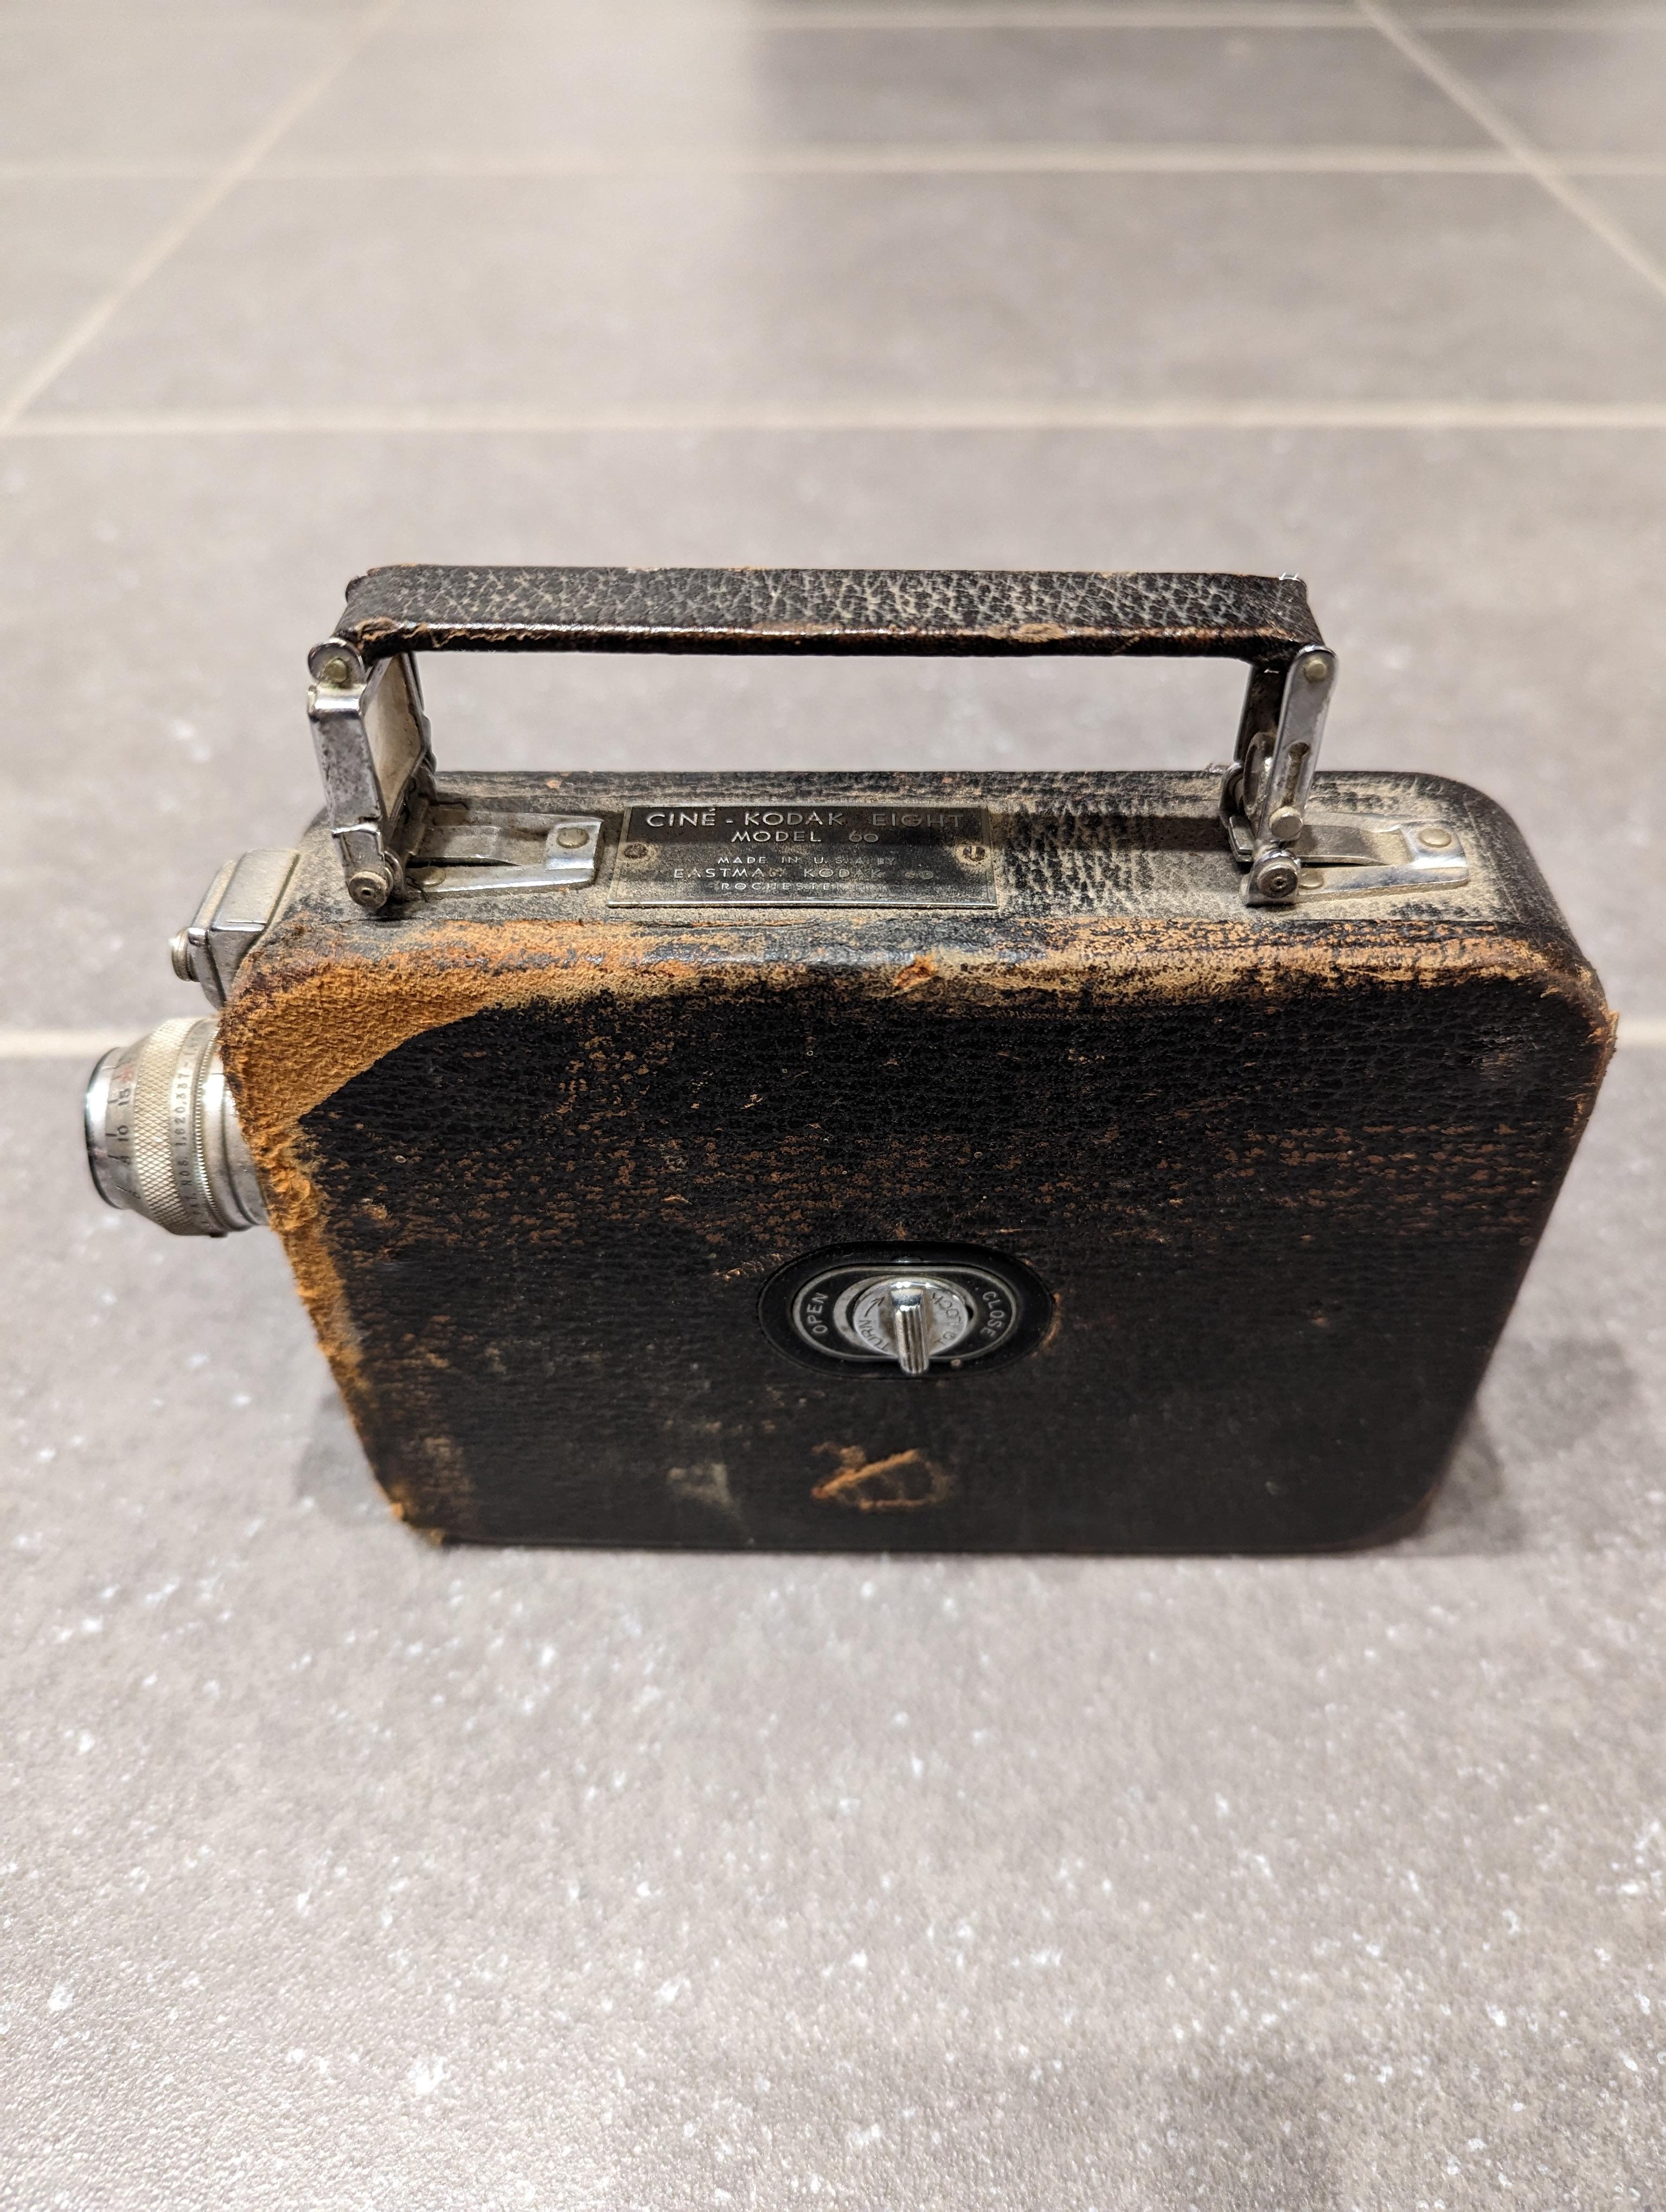 Vintage 1920 Kodak 8mm Kamera.

Schlechter Zustand, gut benutzt. Interessantes dekoratives Stück.